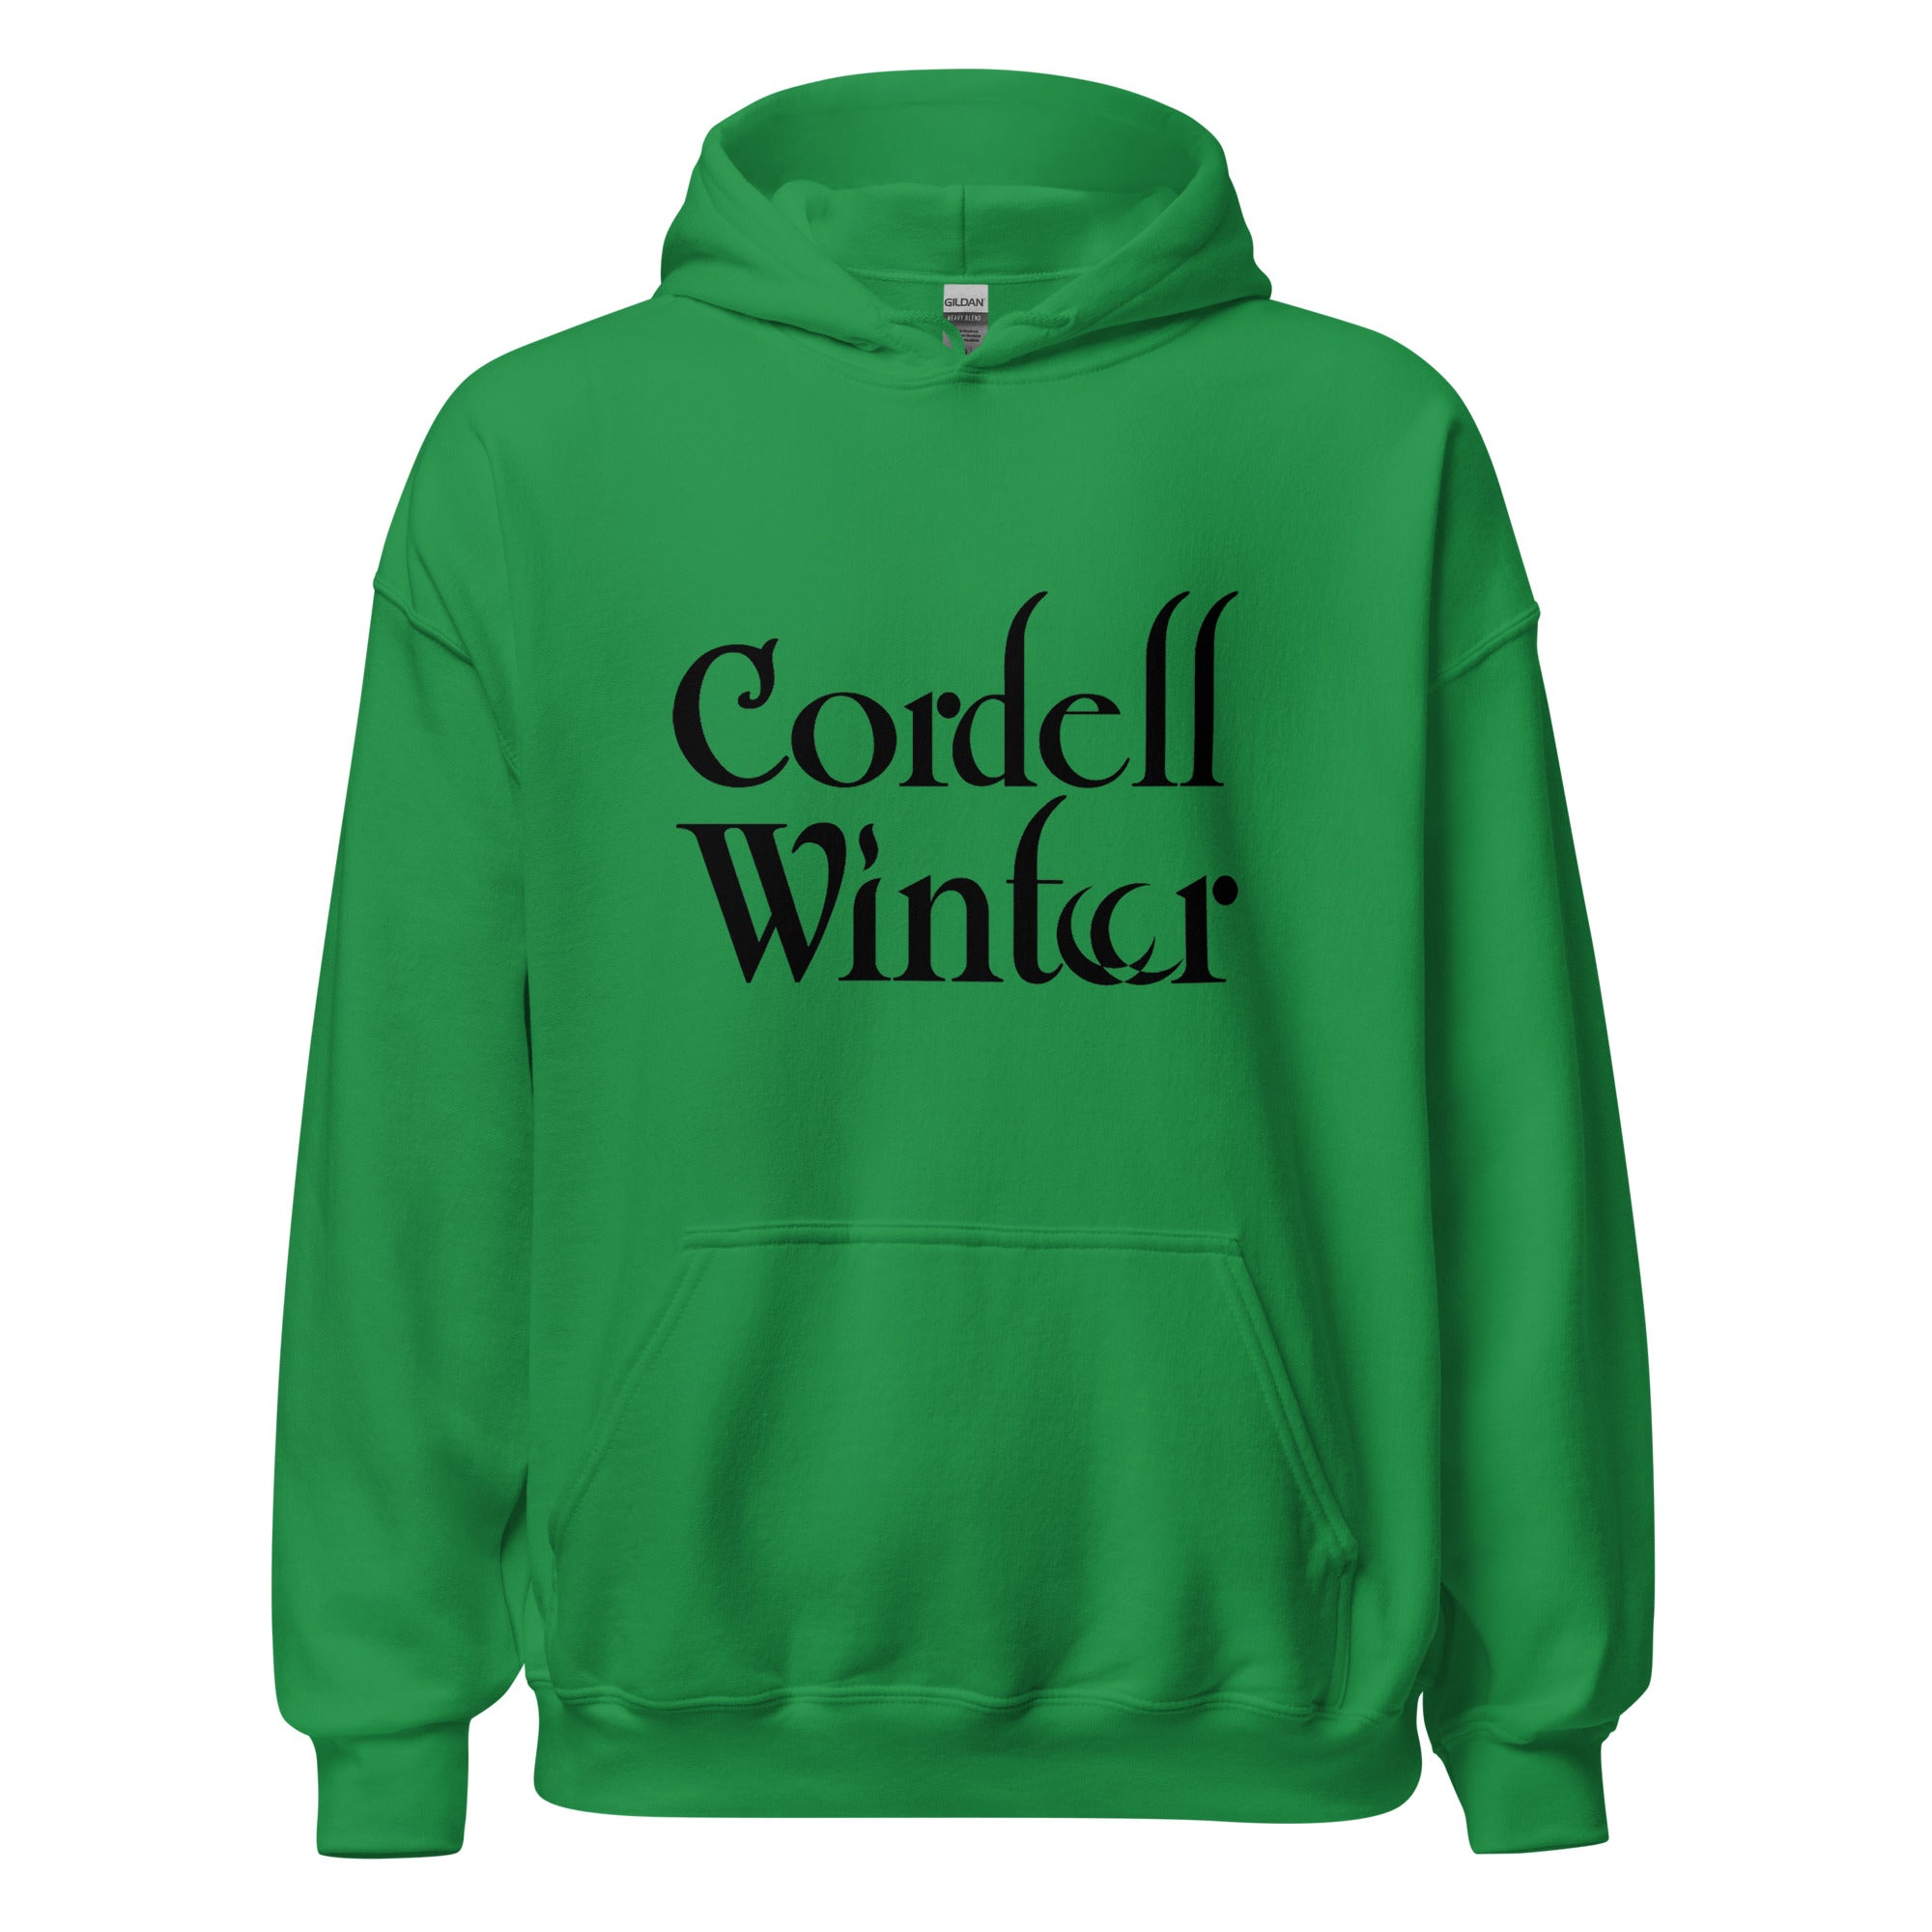 Cordell Winter - Unisex Hoodie